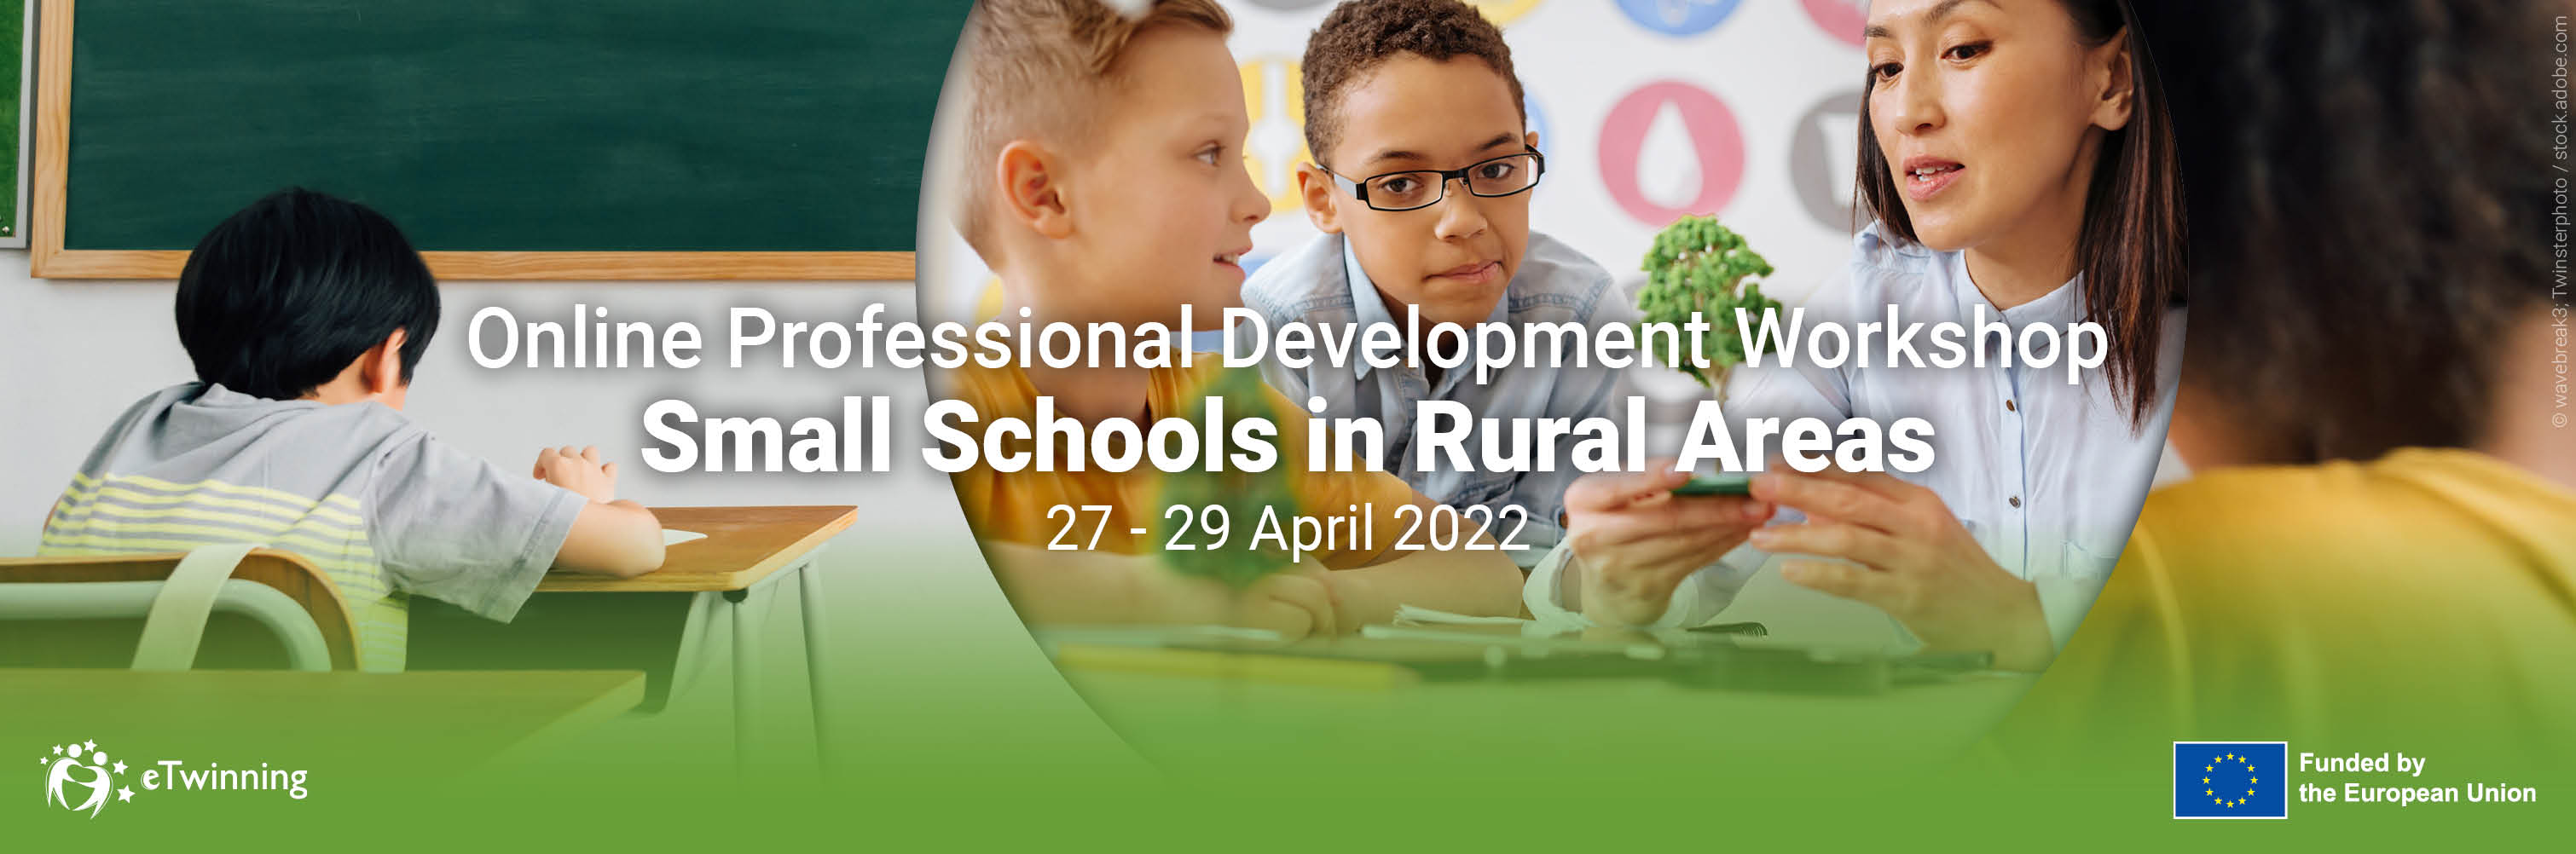 Online Professional Development Workshop on Small Schools in Rural Areas